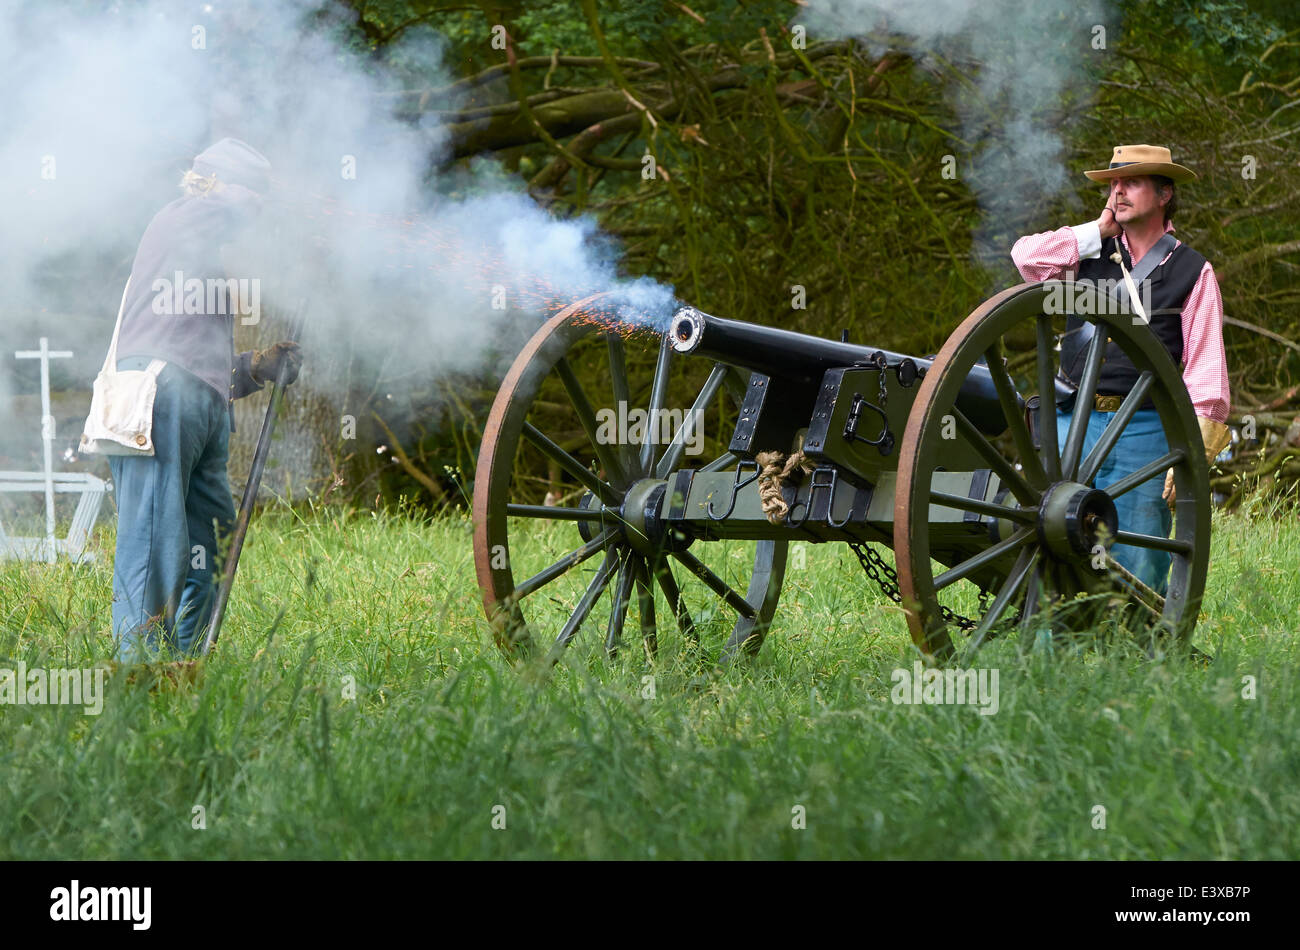 Actors in Confederate uniform firing a cannon as part of an American Civil War battle re-enactment. Stock Photo